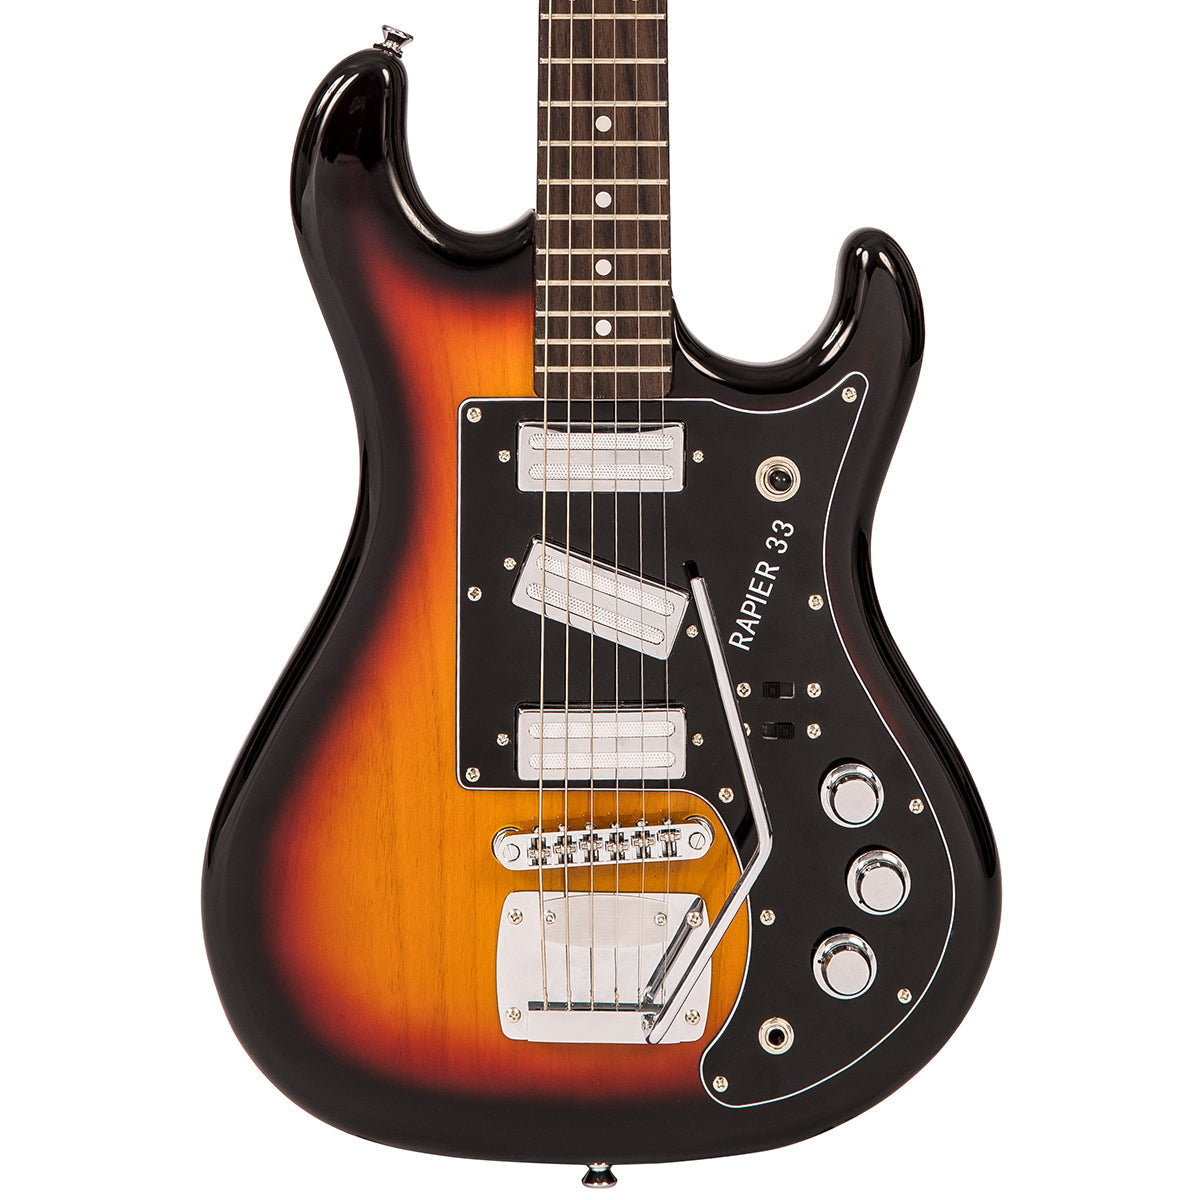 Rapier 33 Electric Guitar ~ 3 Tone Sunburst, Electric Guitar for sale at Richards Guitars.